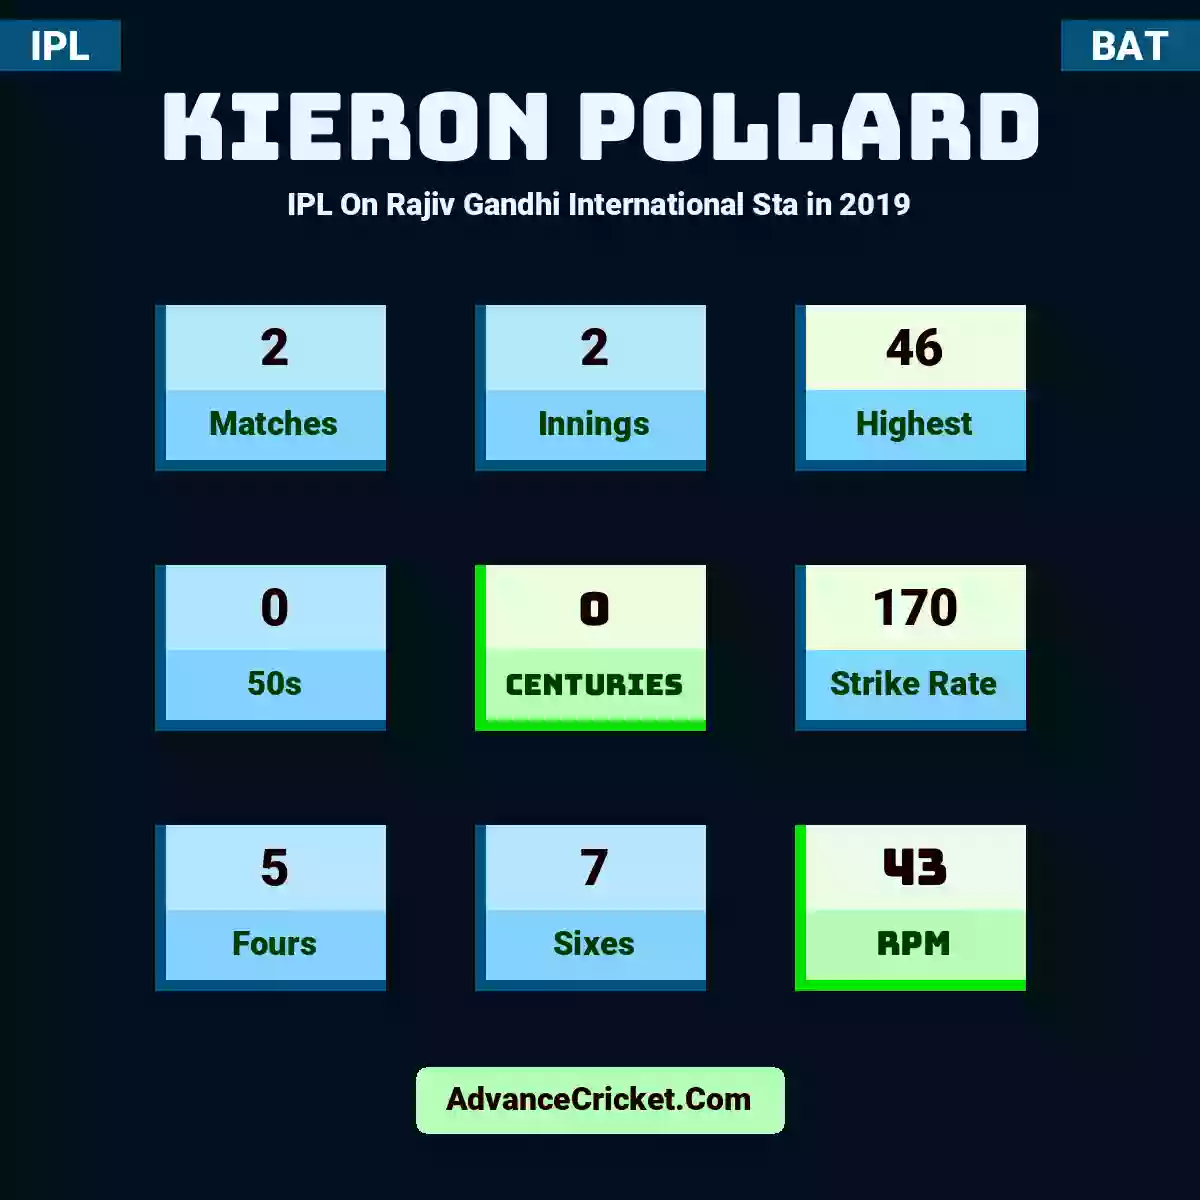 Kieron Pollard IPL  On Rajiv Gandhi International Sta in 2019, Kieron Pollard played 2 matches, scored 46 runs as highest, 0 half-centuries, and 0 centuries, with a strike rate of 170. K.Pollard hit 5 fours and 7 sixes, with an RPM of 43.